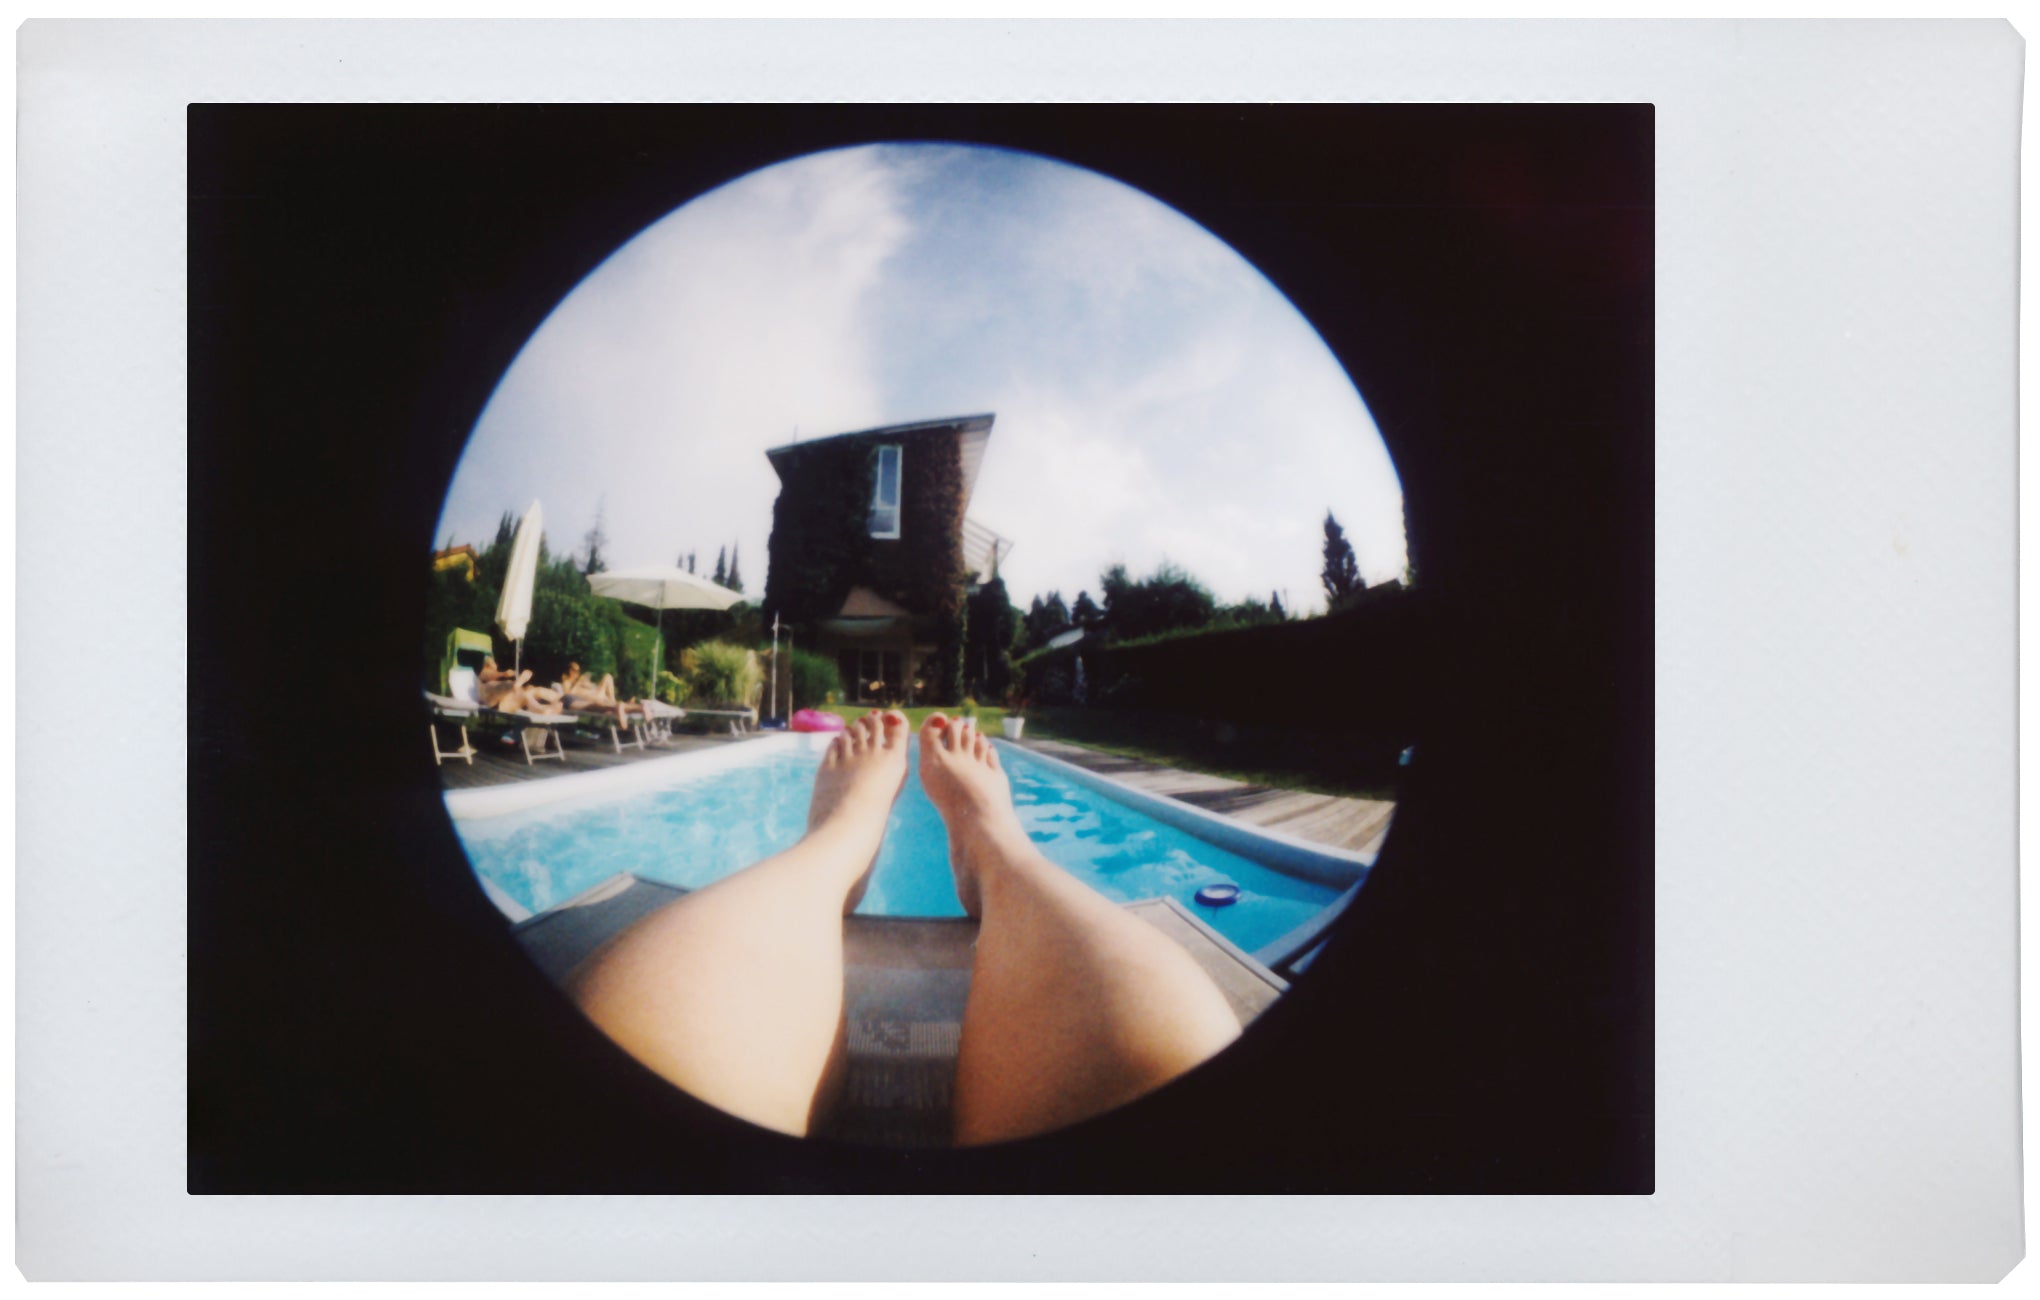 LOMOGRAPHY LOMO'Instant camera & Lenses, San Remo (Instax film camera)